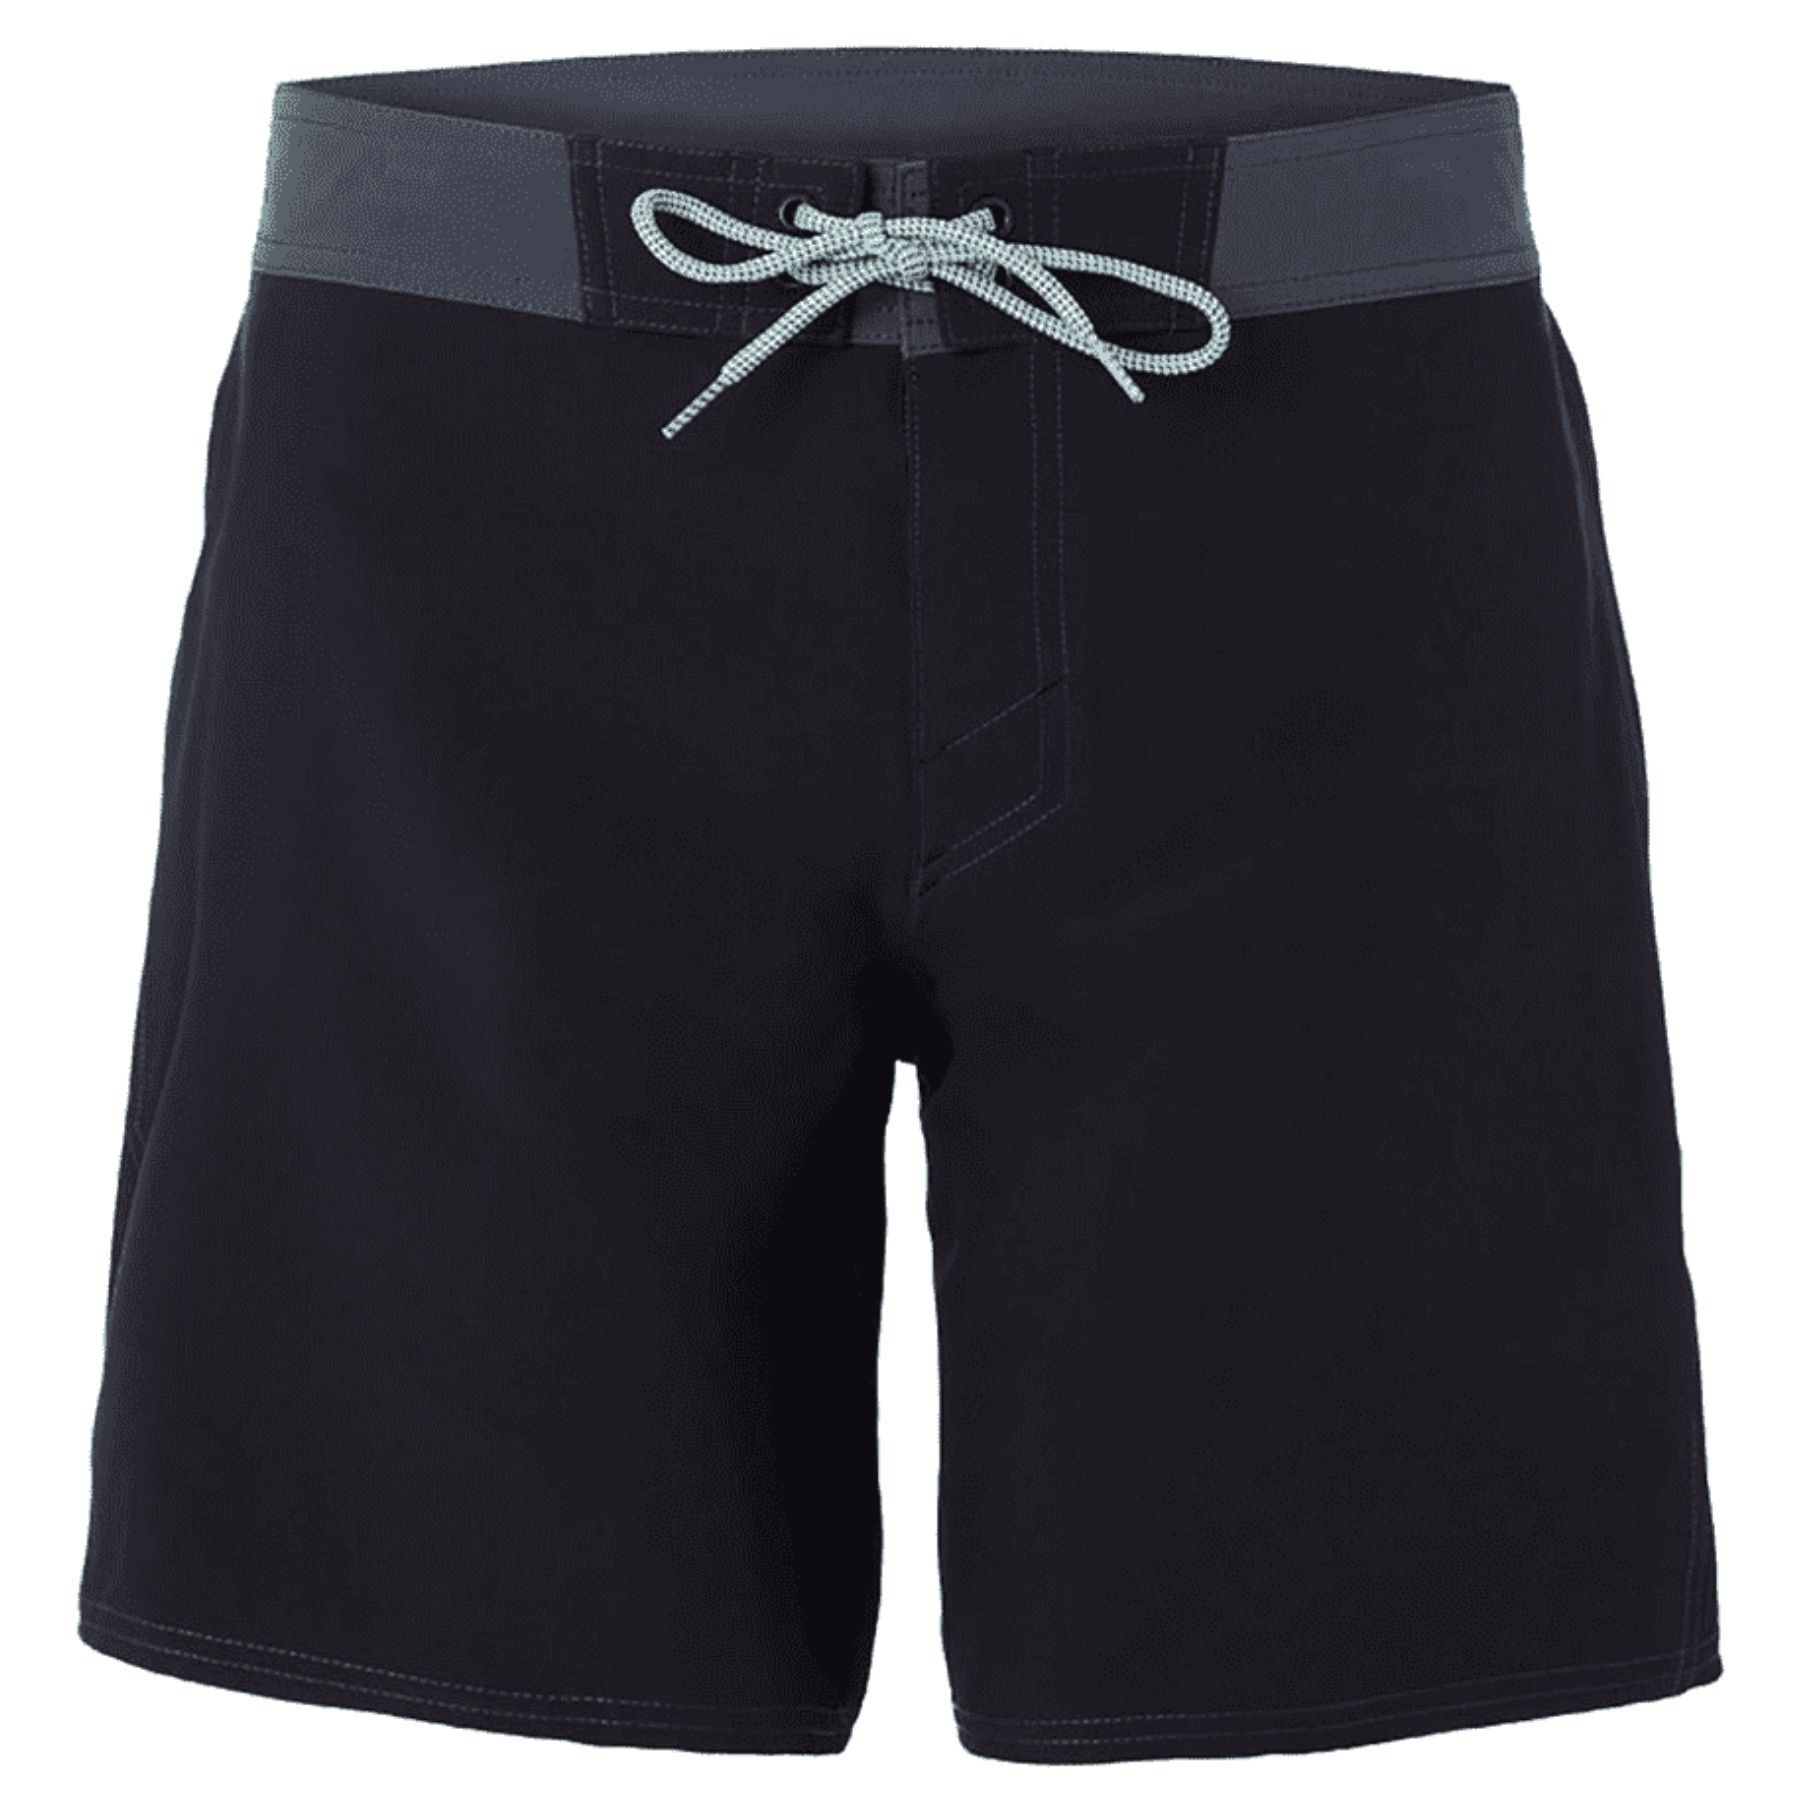 O'Neill Solid Freak - Swim shorts - Men's